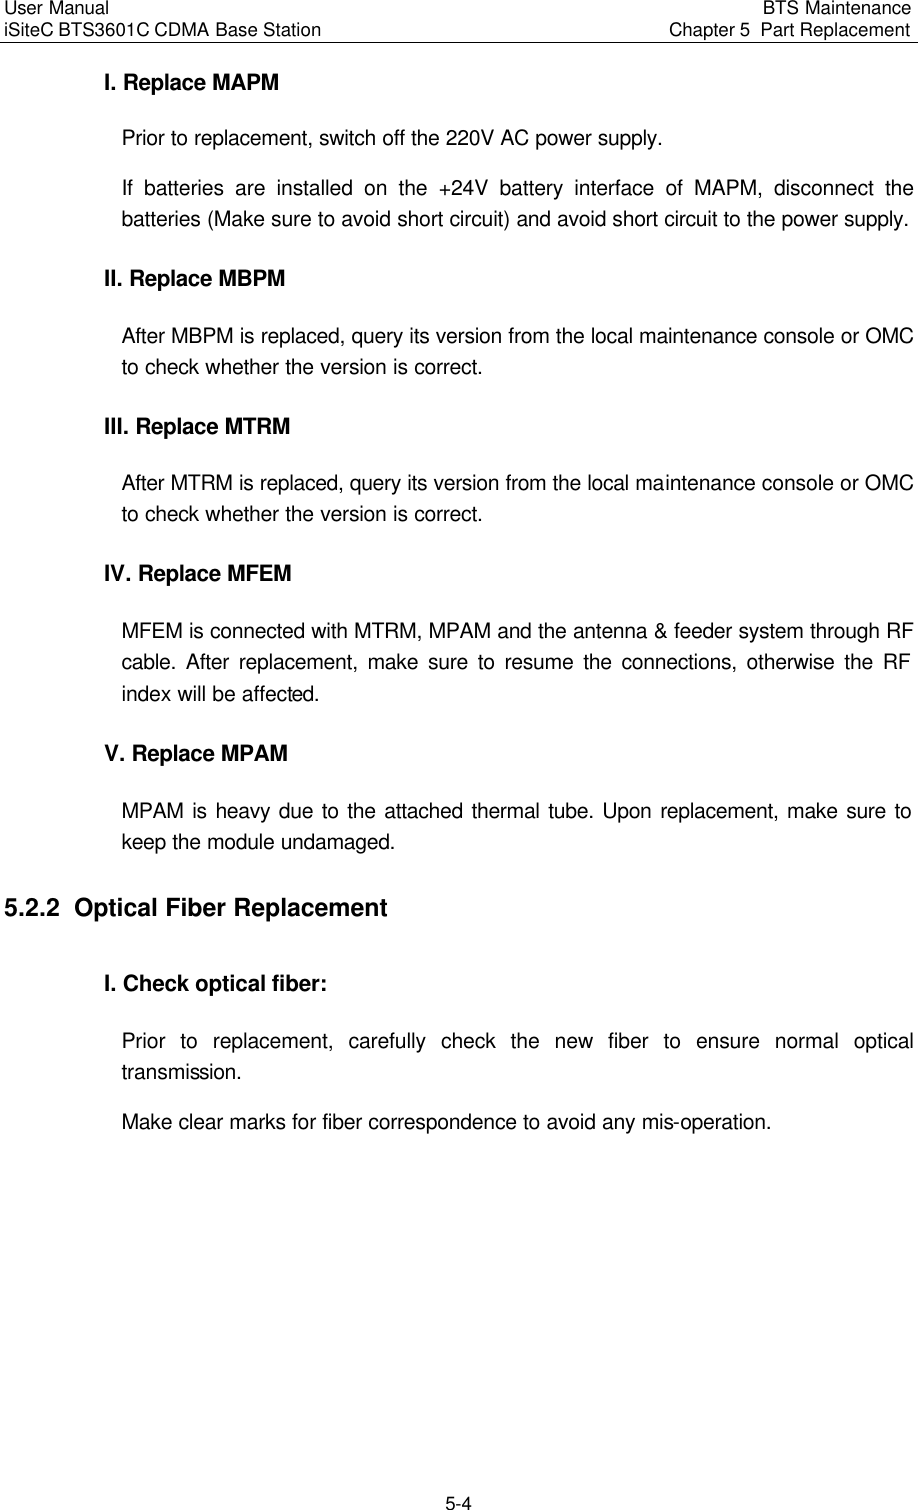 Page 128 of Huawei Technologies BTS3601C-800 CDMA Base Station User Manual 3